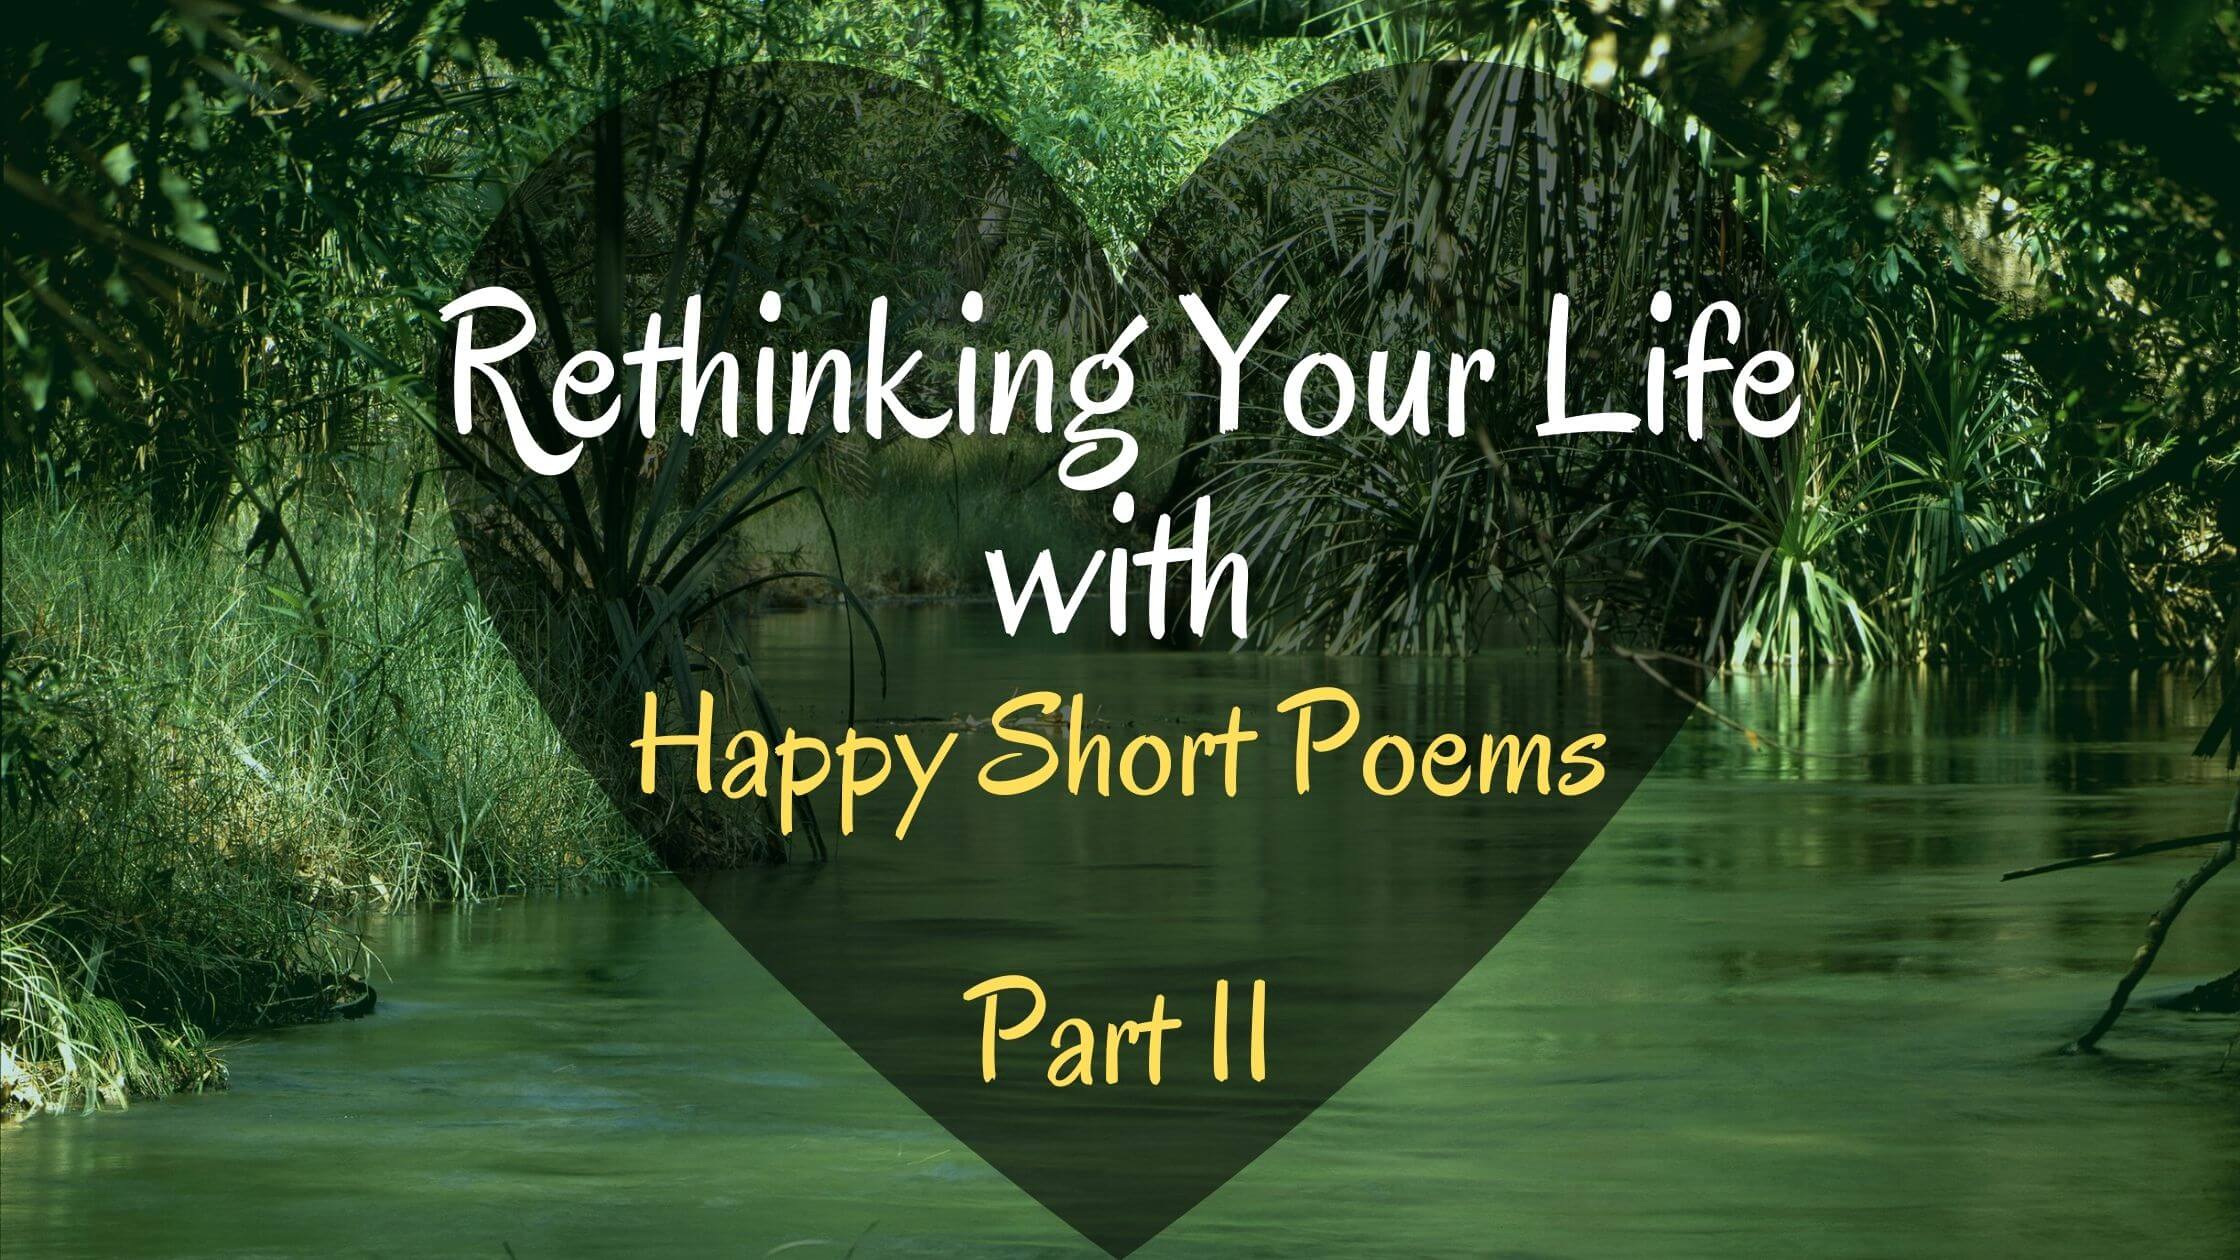 happy short poetry part 2